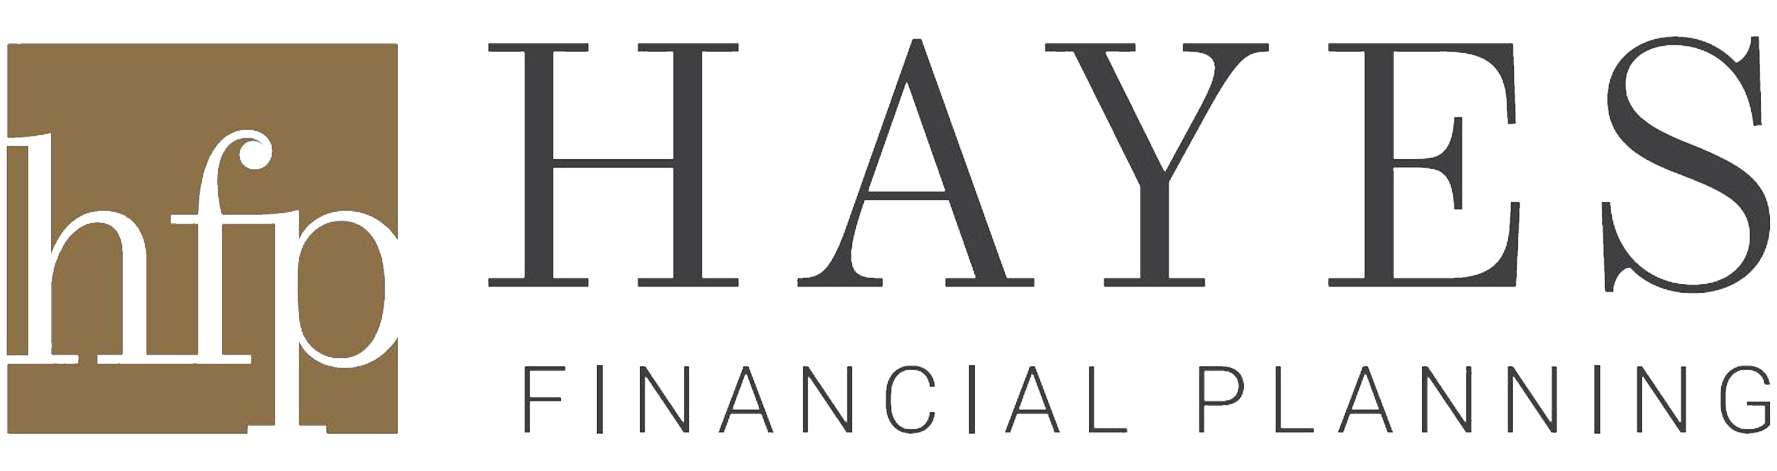 Hayes-logo.png